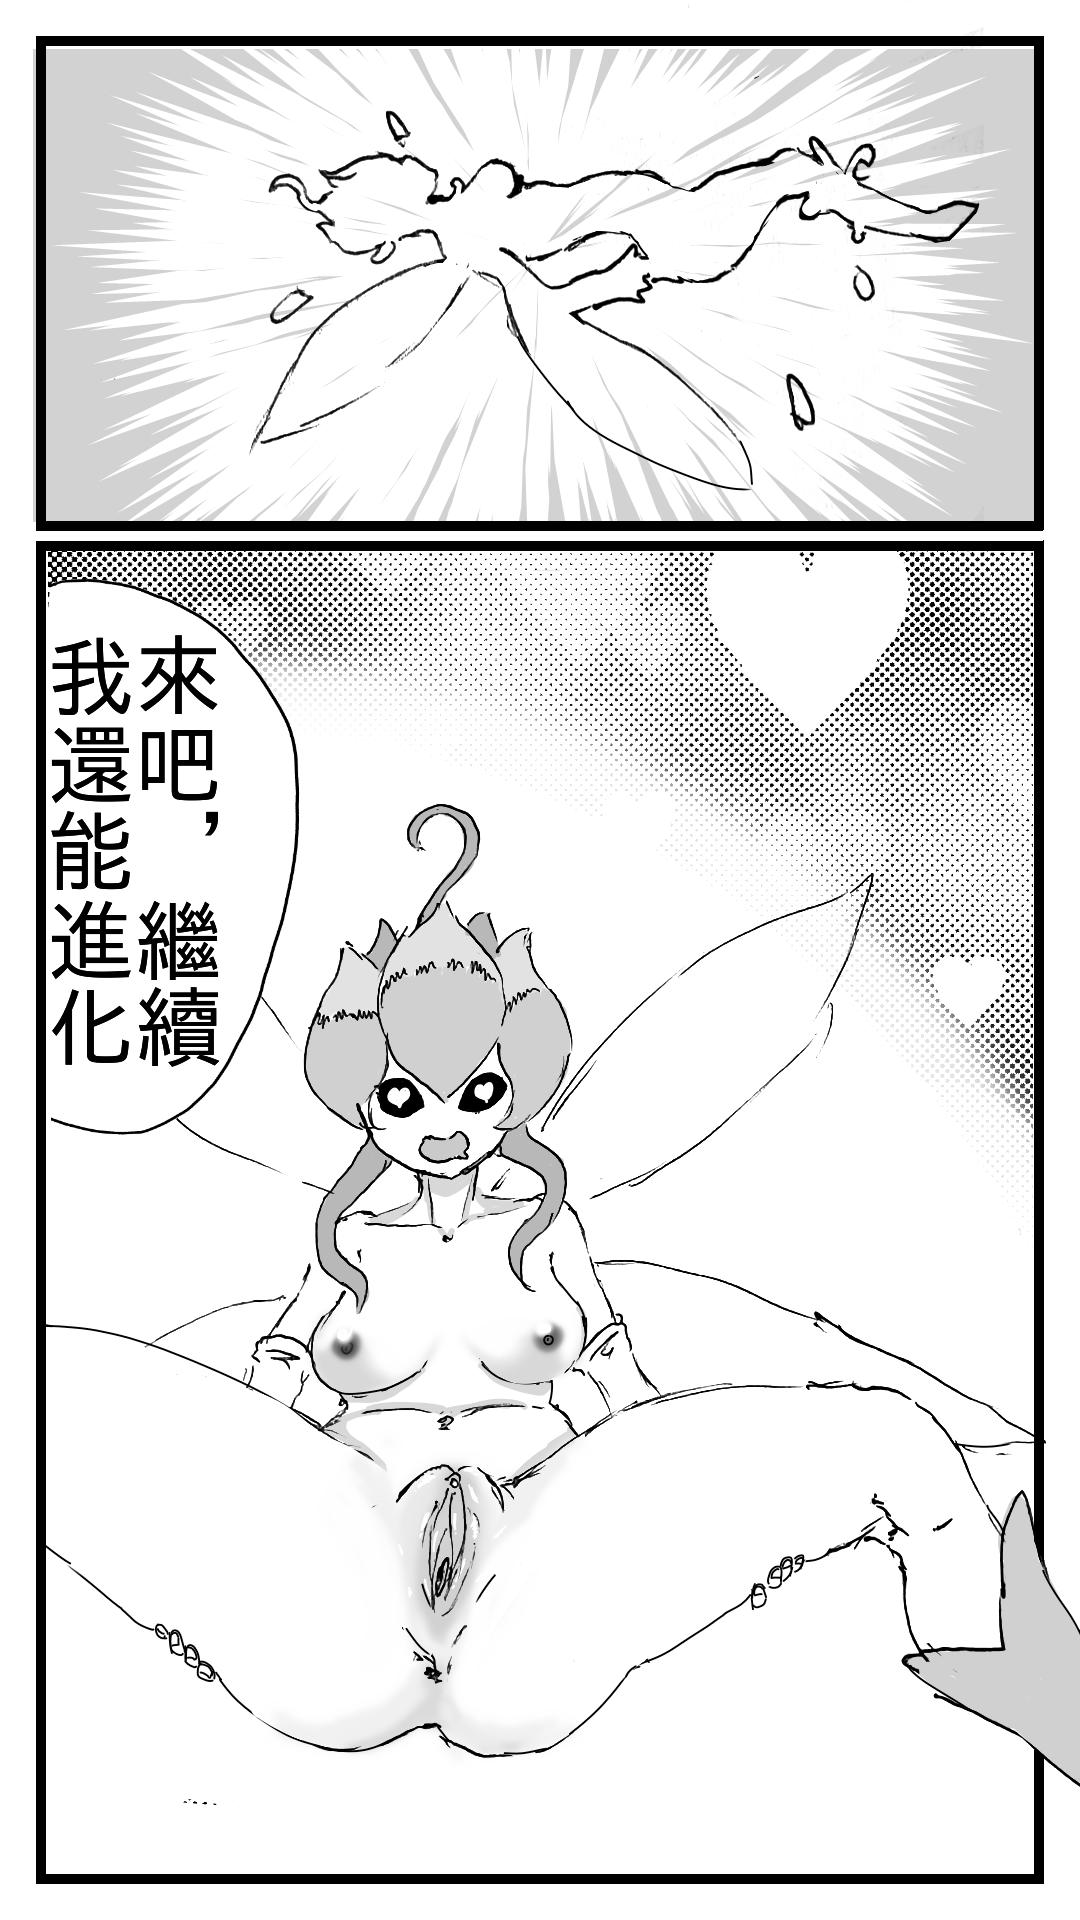 Belly 小智大战仙人掌兽 - Digimon Pokemon | pocket monsters Strip - Page 11